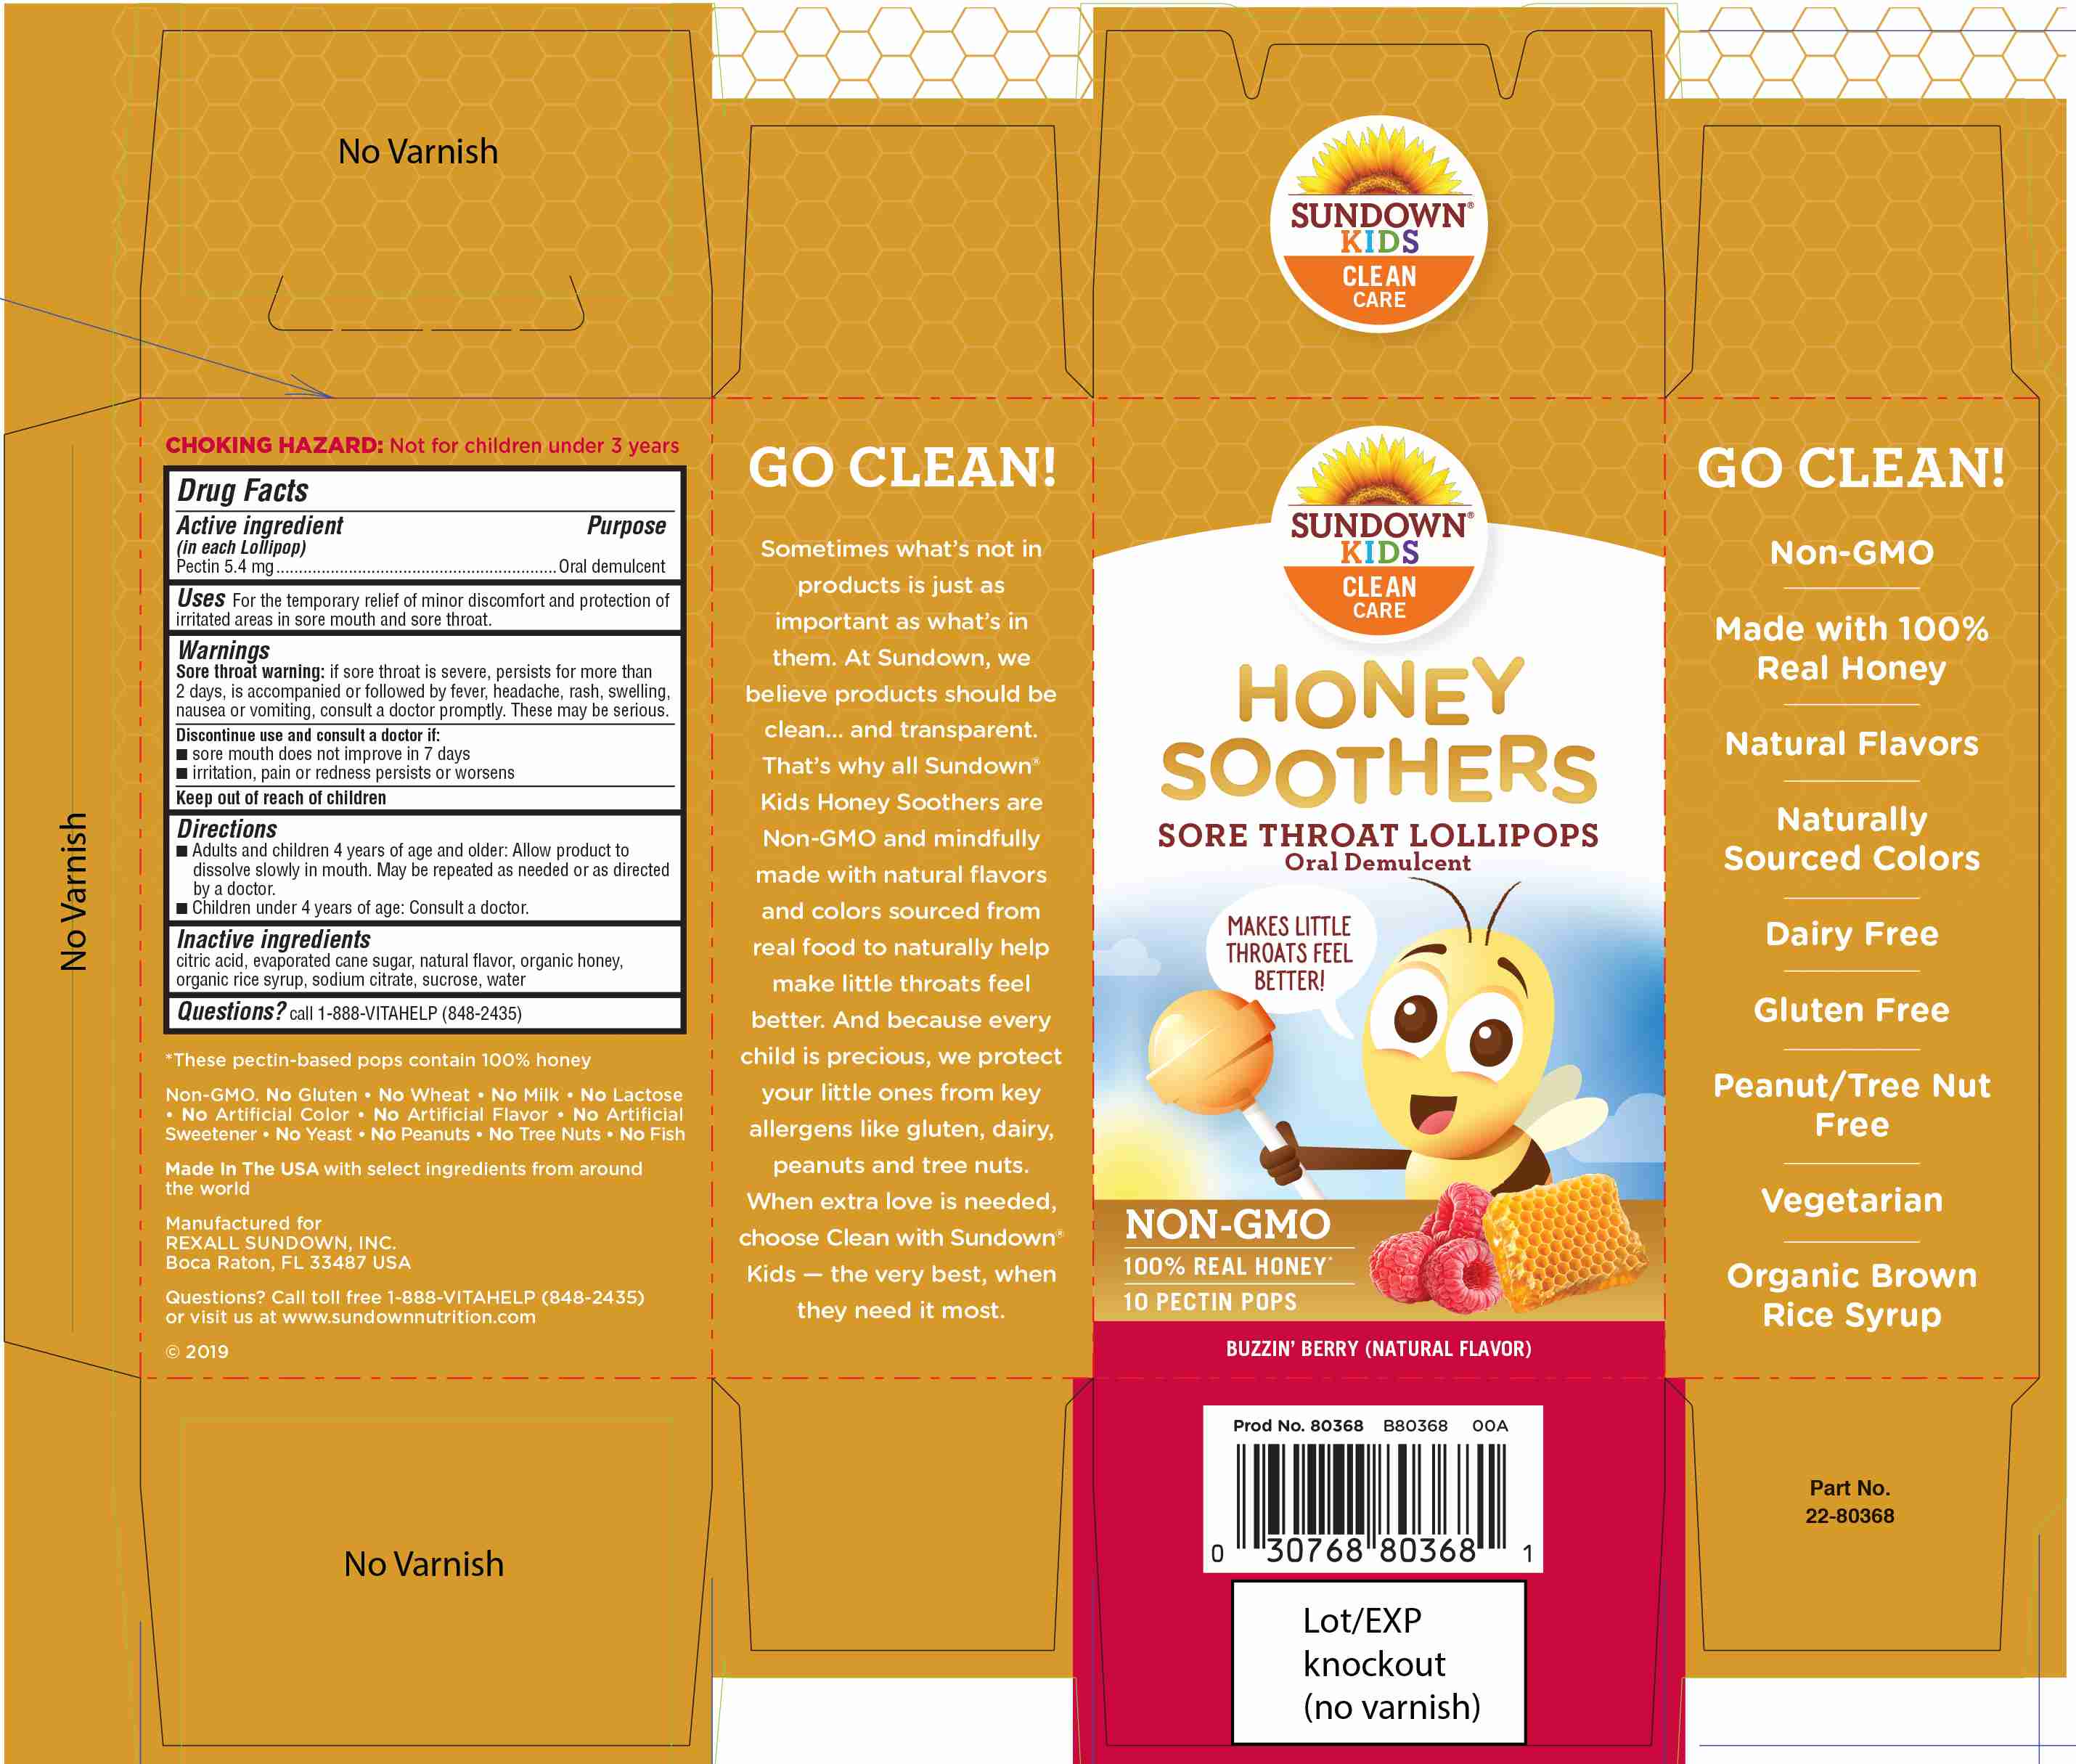 Is Sundown Honey Soothers Lollipops | Pectin Lozenge safe while breastfeeding